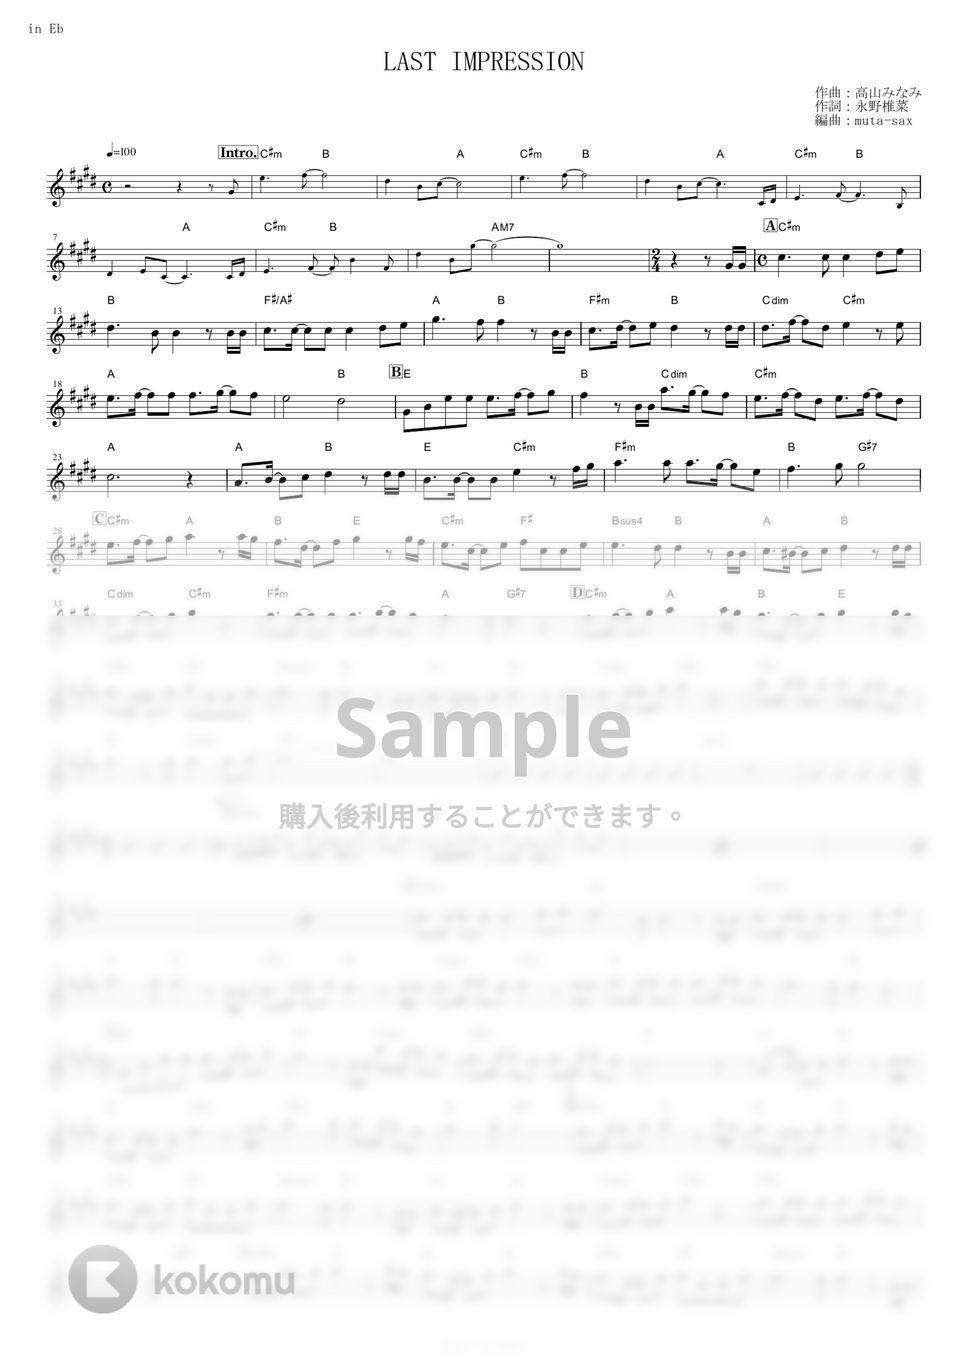 TWO-MIX - LAST IMPRESSION (『新機動戦記ガンダムW Endless Waltz 特別編』 / in Eb) by muta-sax